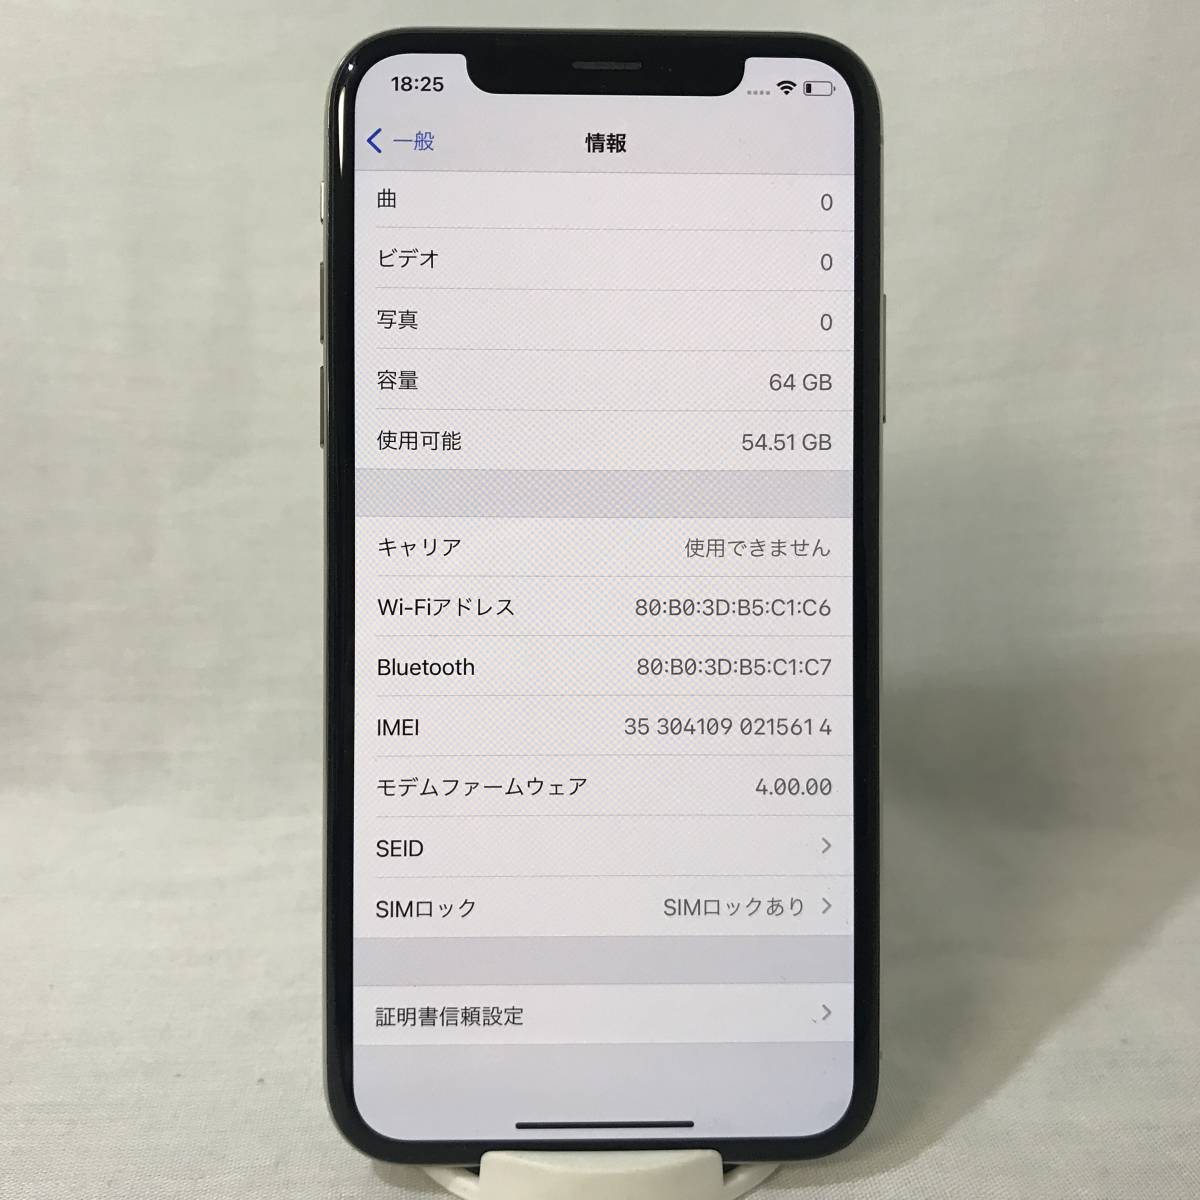 iPhone X Silver 64 GB SIMフリー US版 Shin Touchaku 